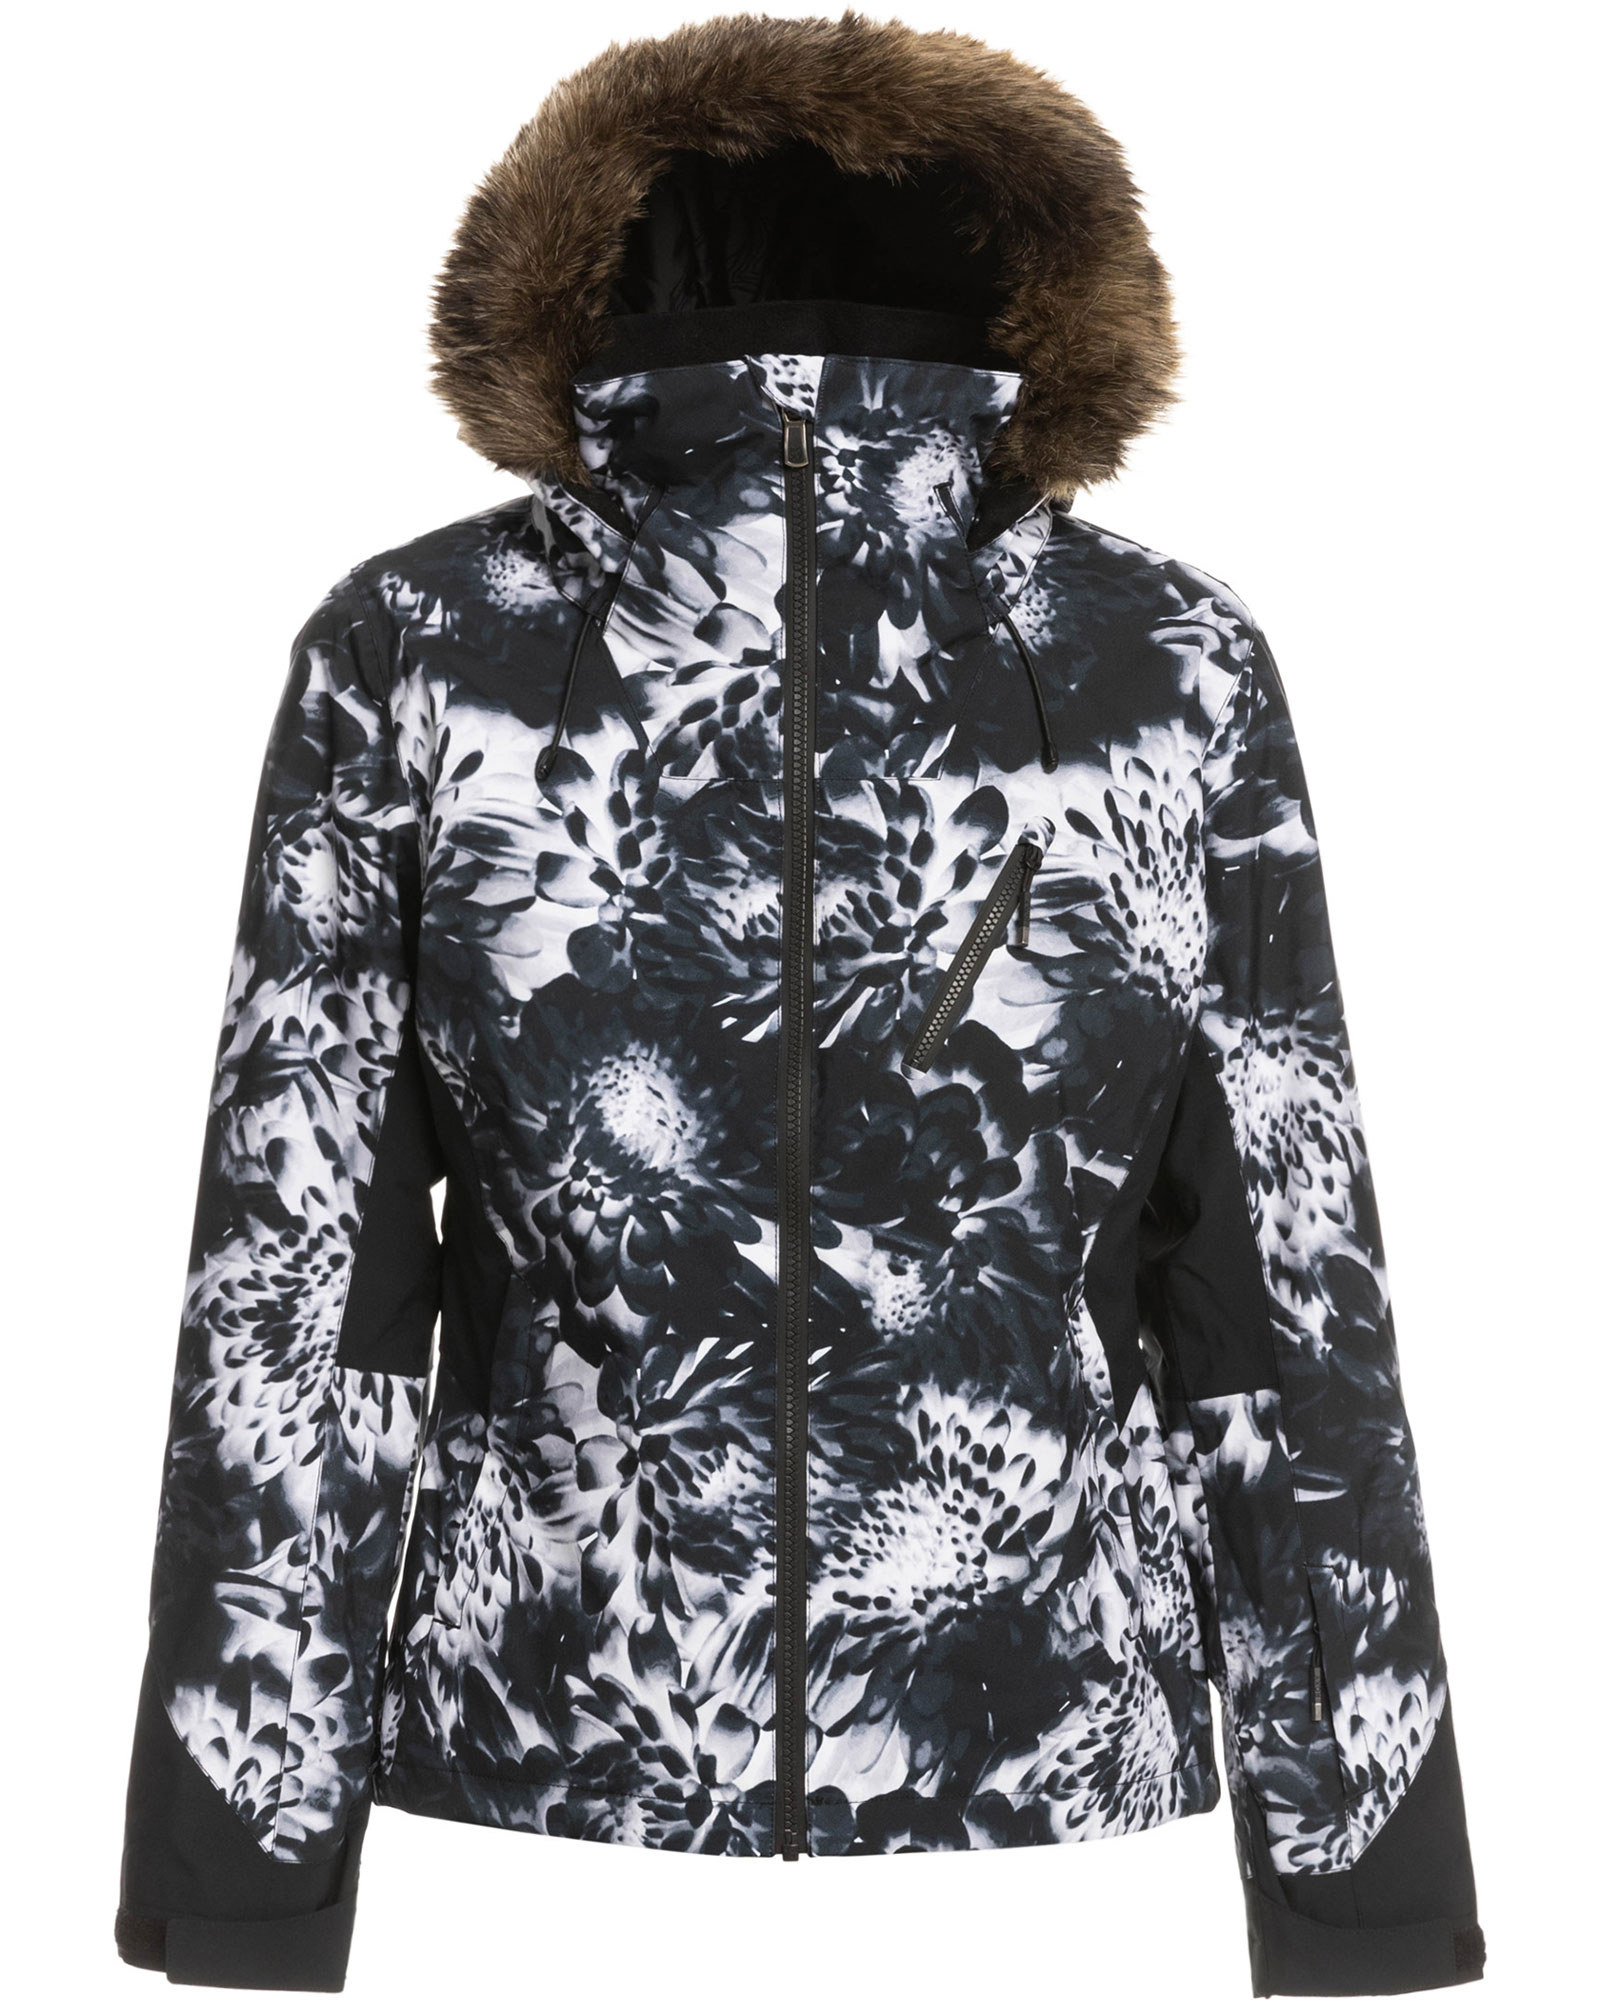 Roxy Jet Ski Premium Women’s Jacket - True Black Future Flower Print XL